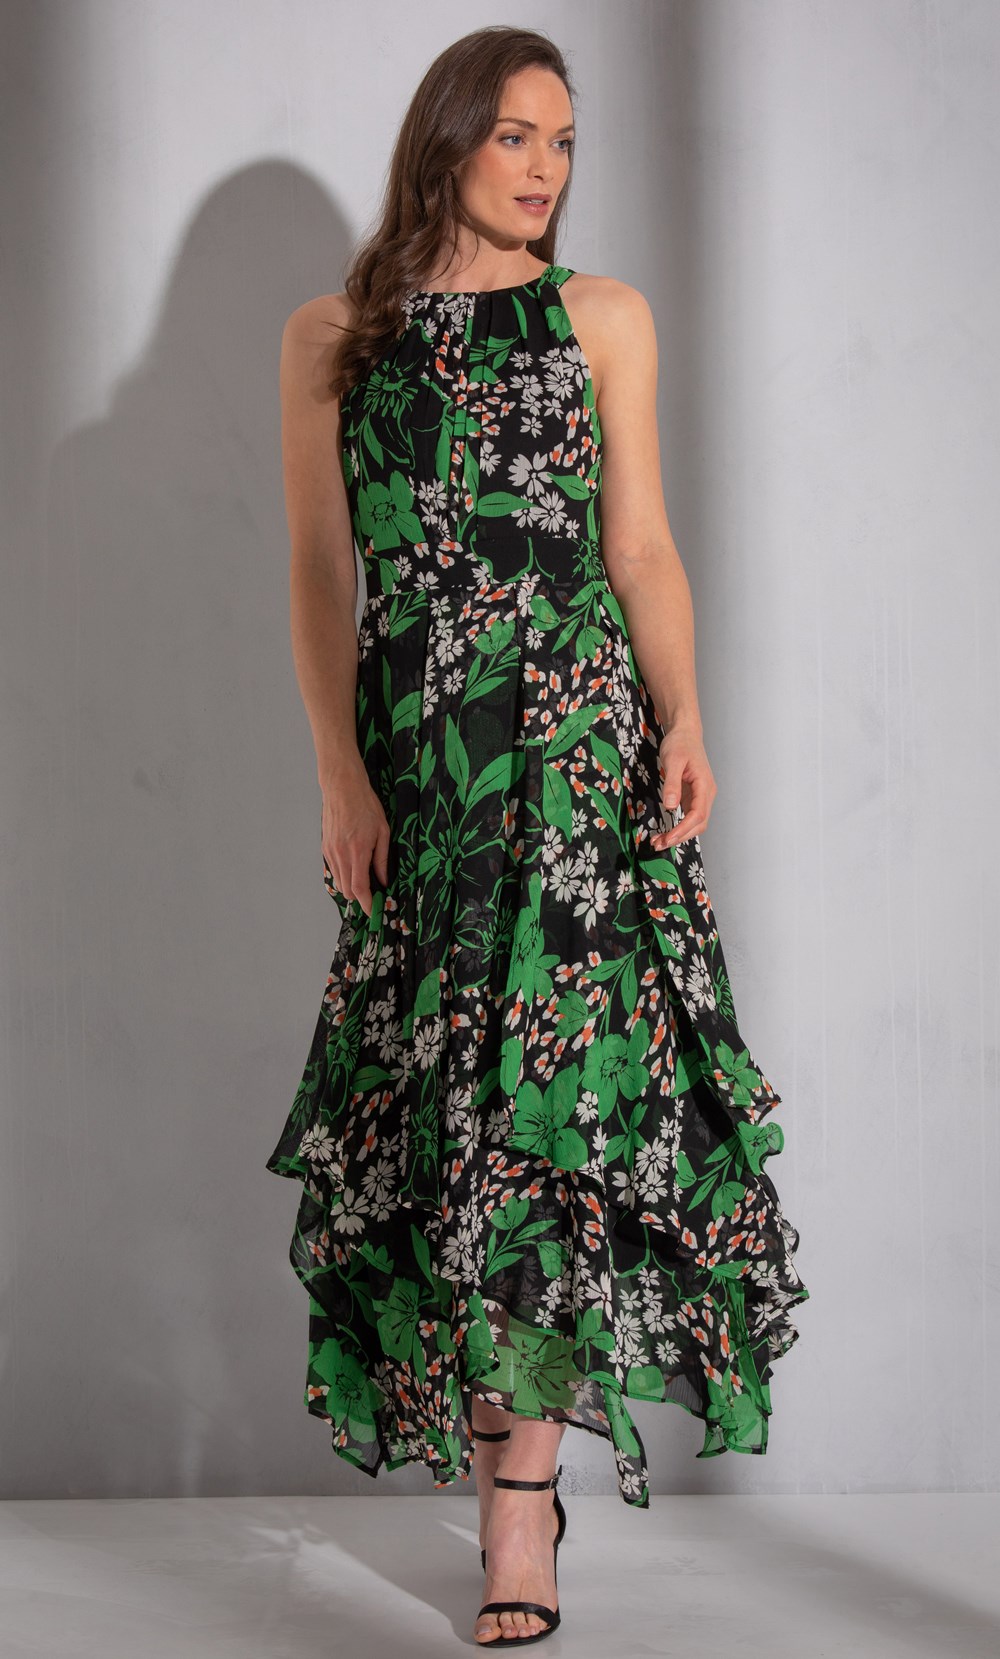 Brands - Klass Floral Printed Chiffon Layered Maxi Dress Black/Green/Multi Women’s